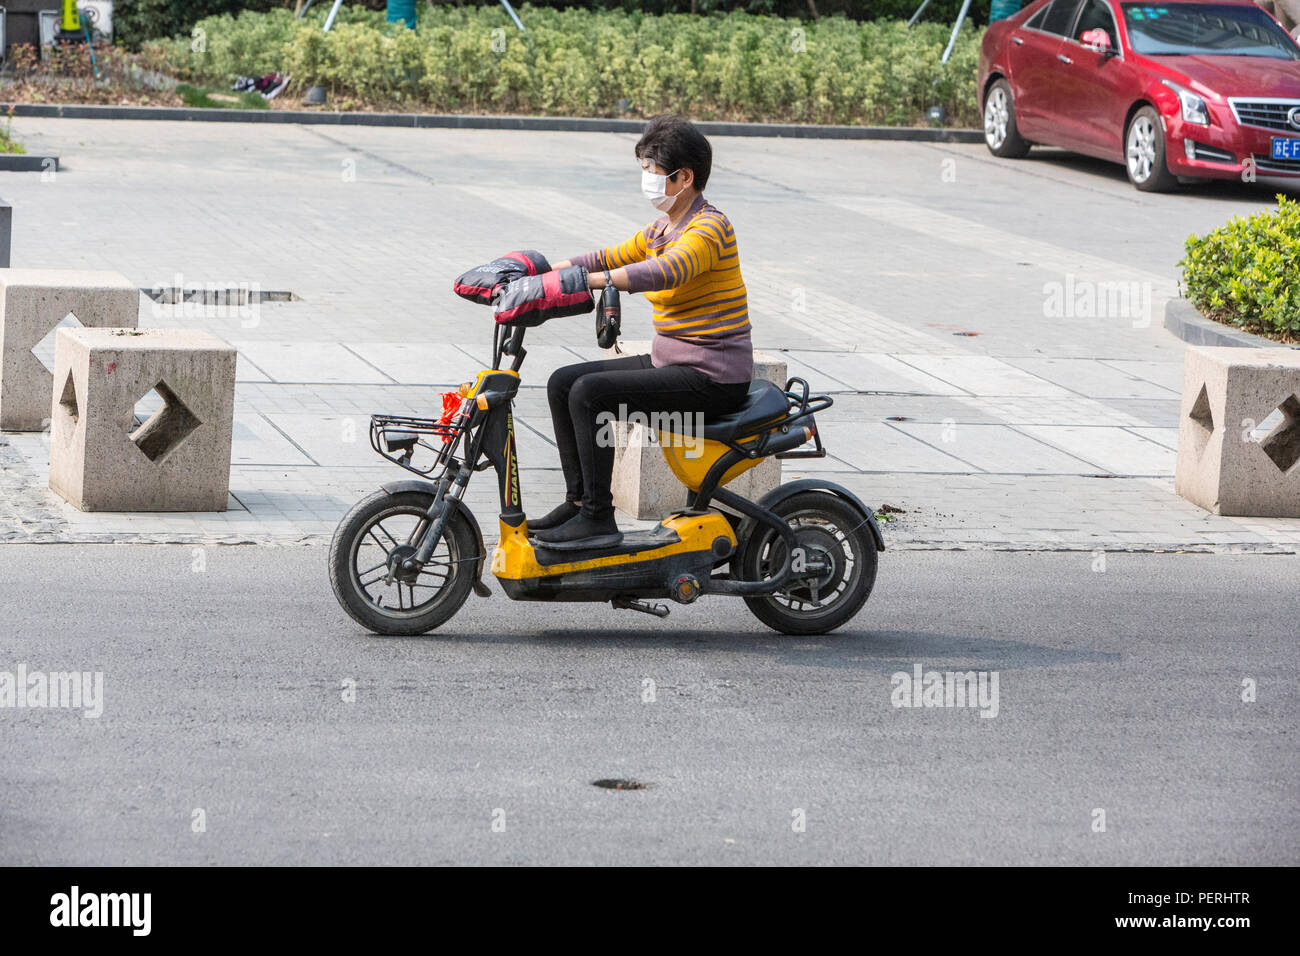 Suzhou, Jiangsu, China. Mujer con máscara respiratoria montando una motocicleta eléctrica. Foto de stock